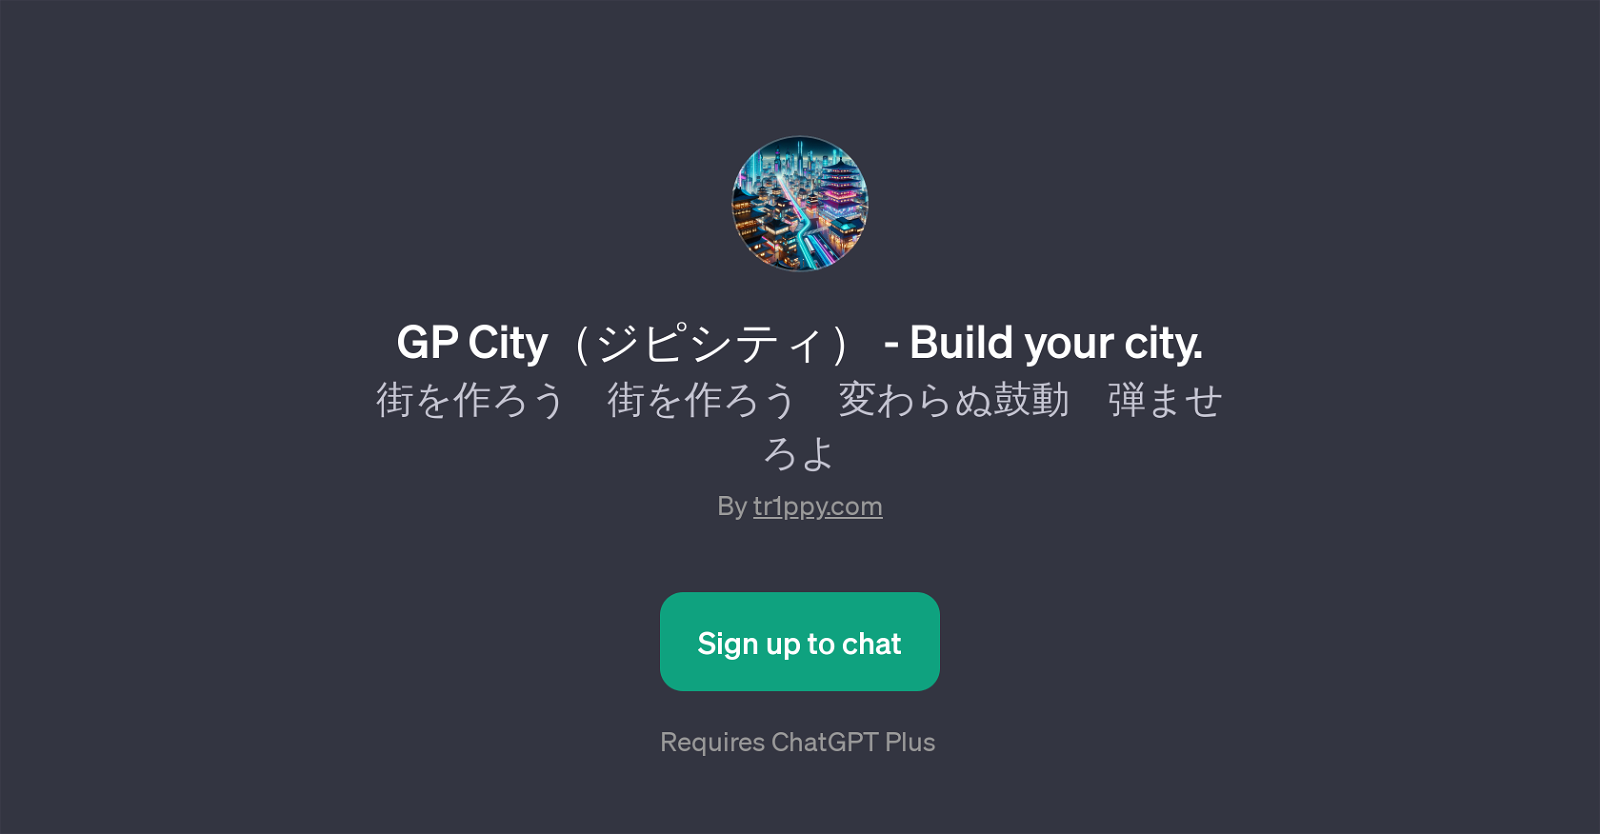 GP City website